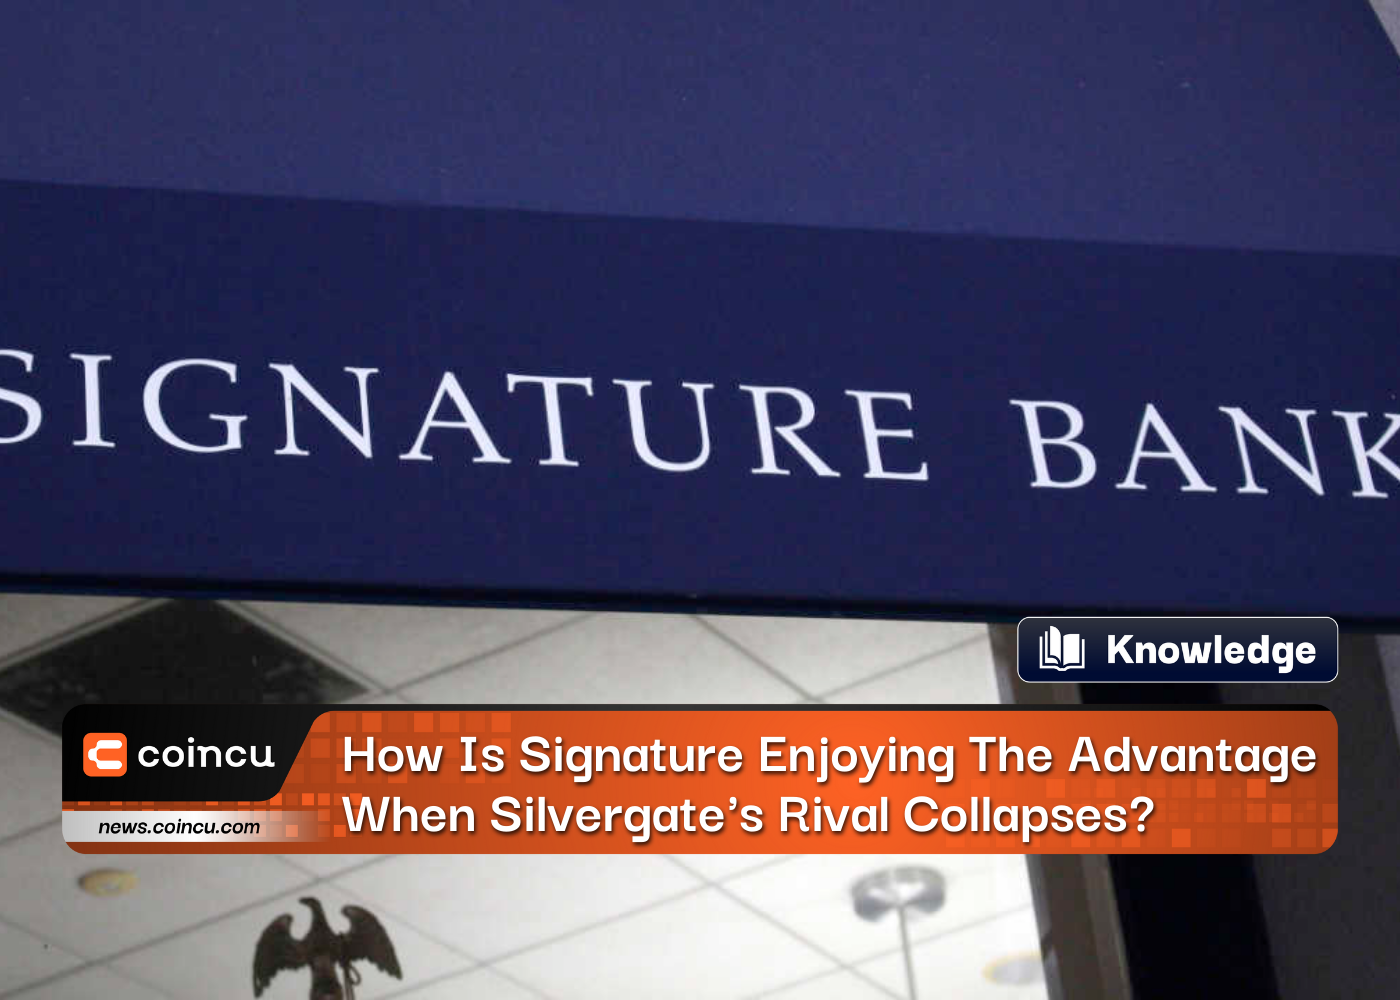 Silvergate의 라이벌이 무너졌을 때 Signature Bank는 어떻게 이점을 누리고 있습니까?